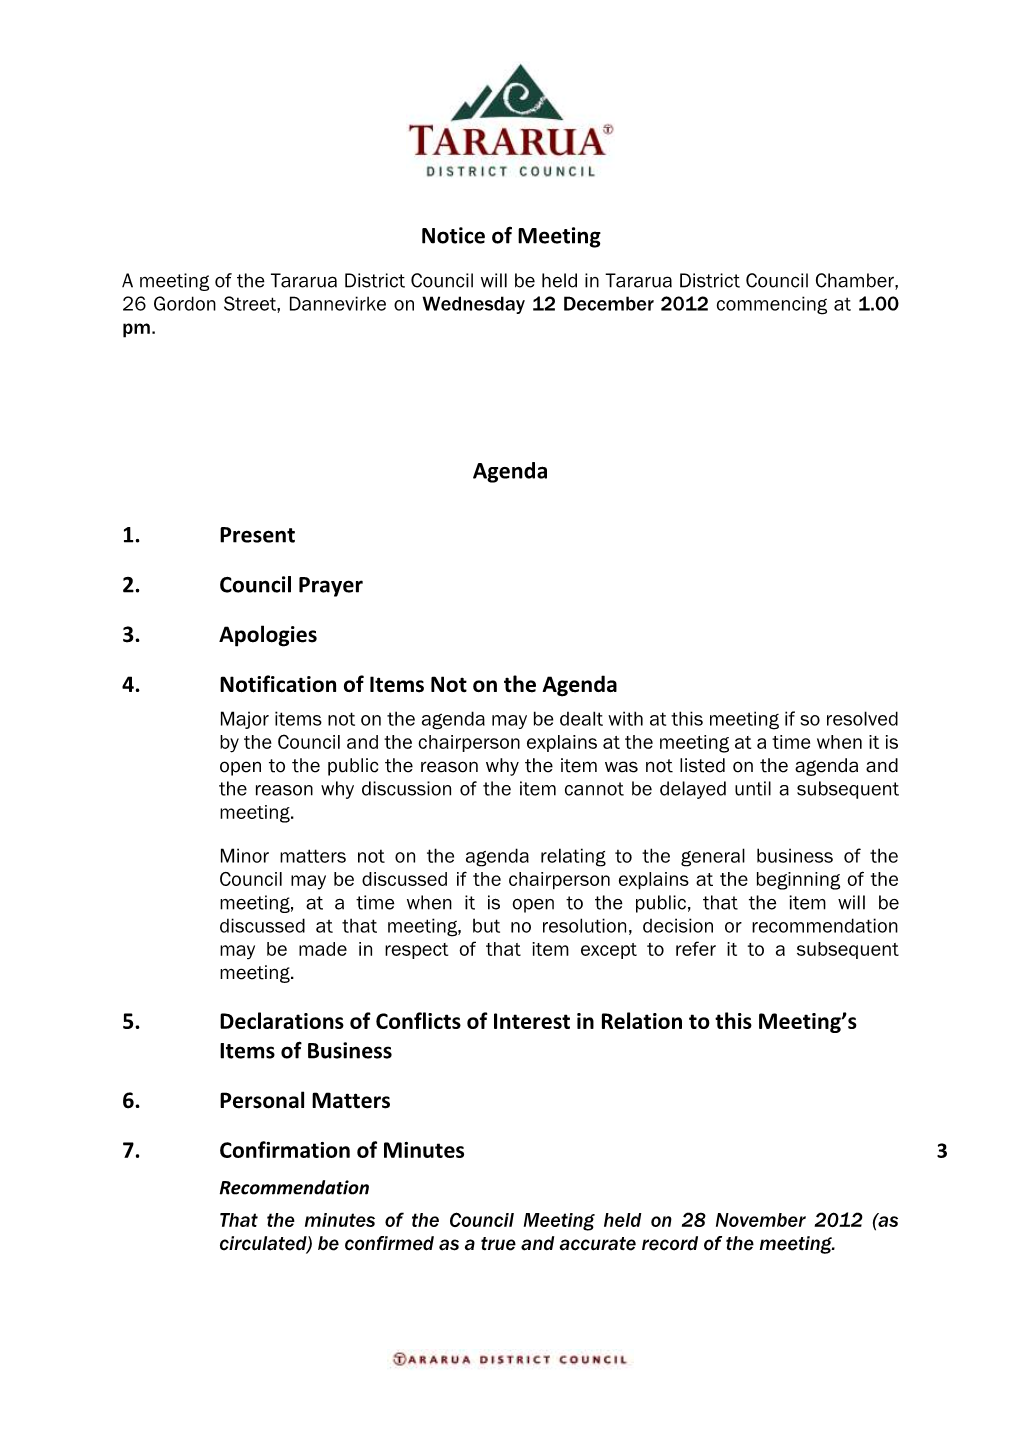 Notice of Meeting Agenda 1. Present 2. Council